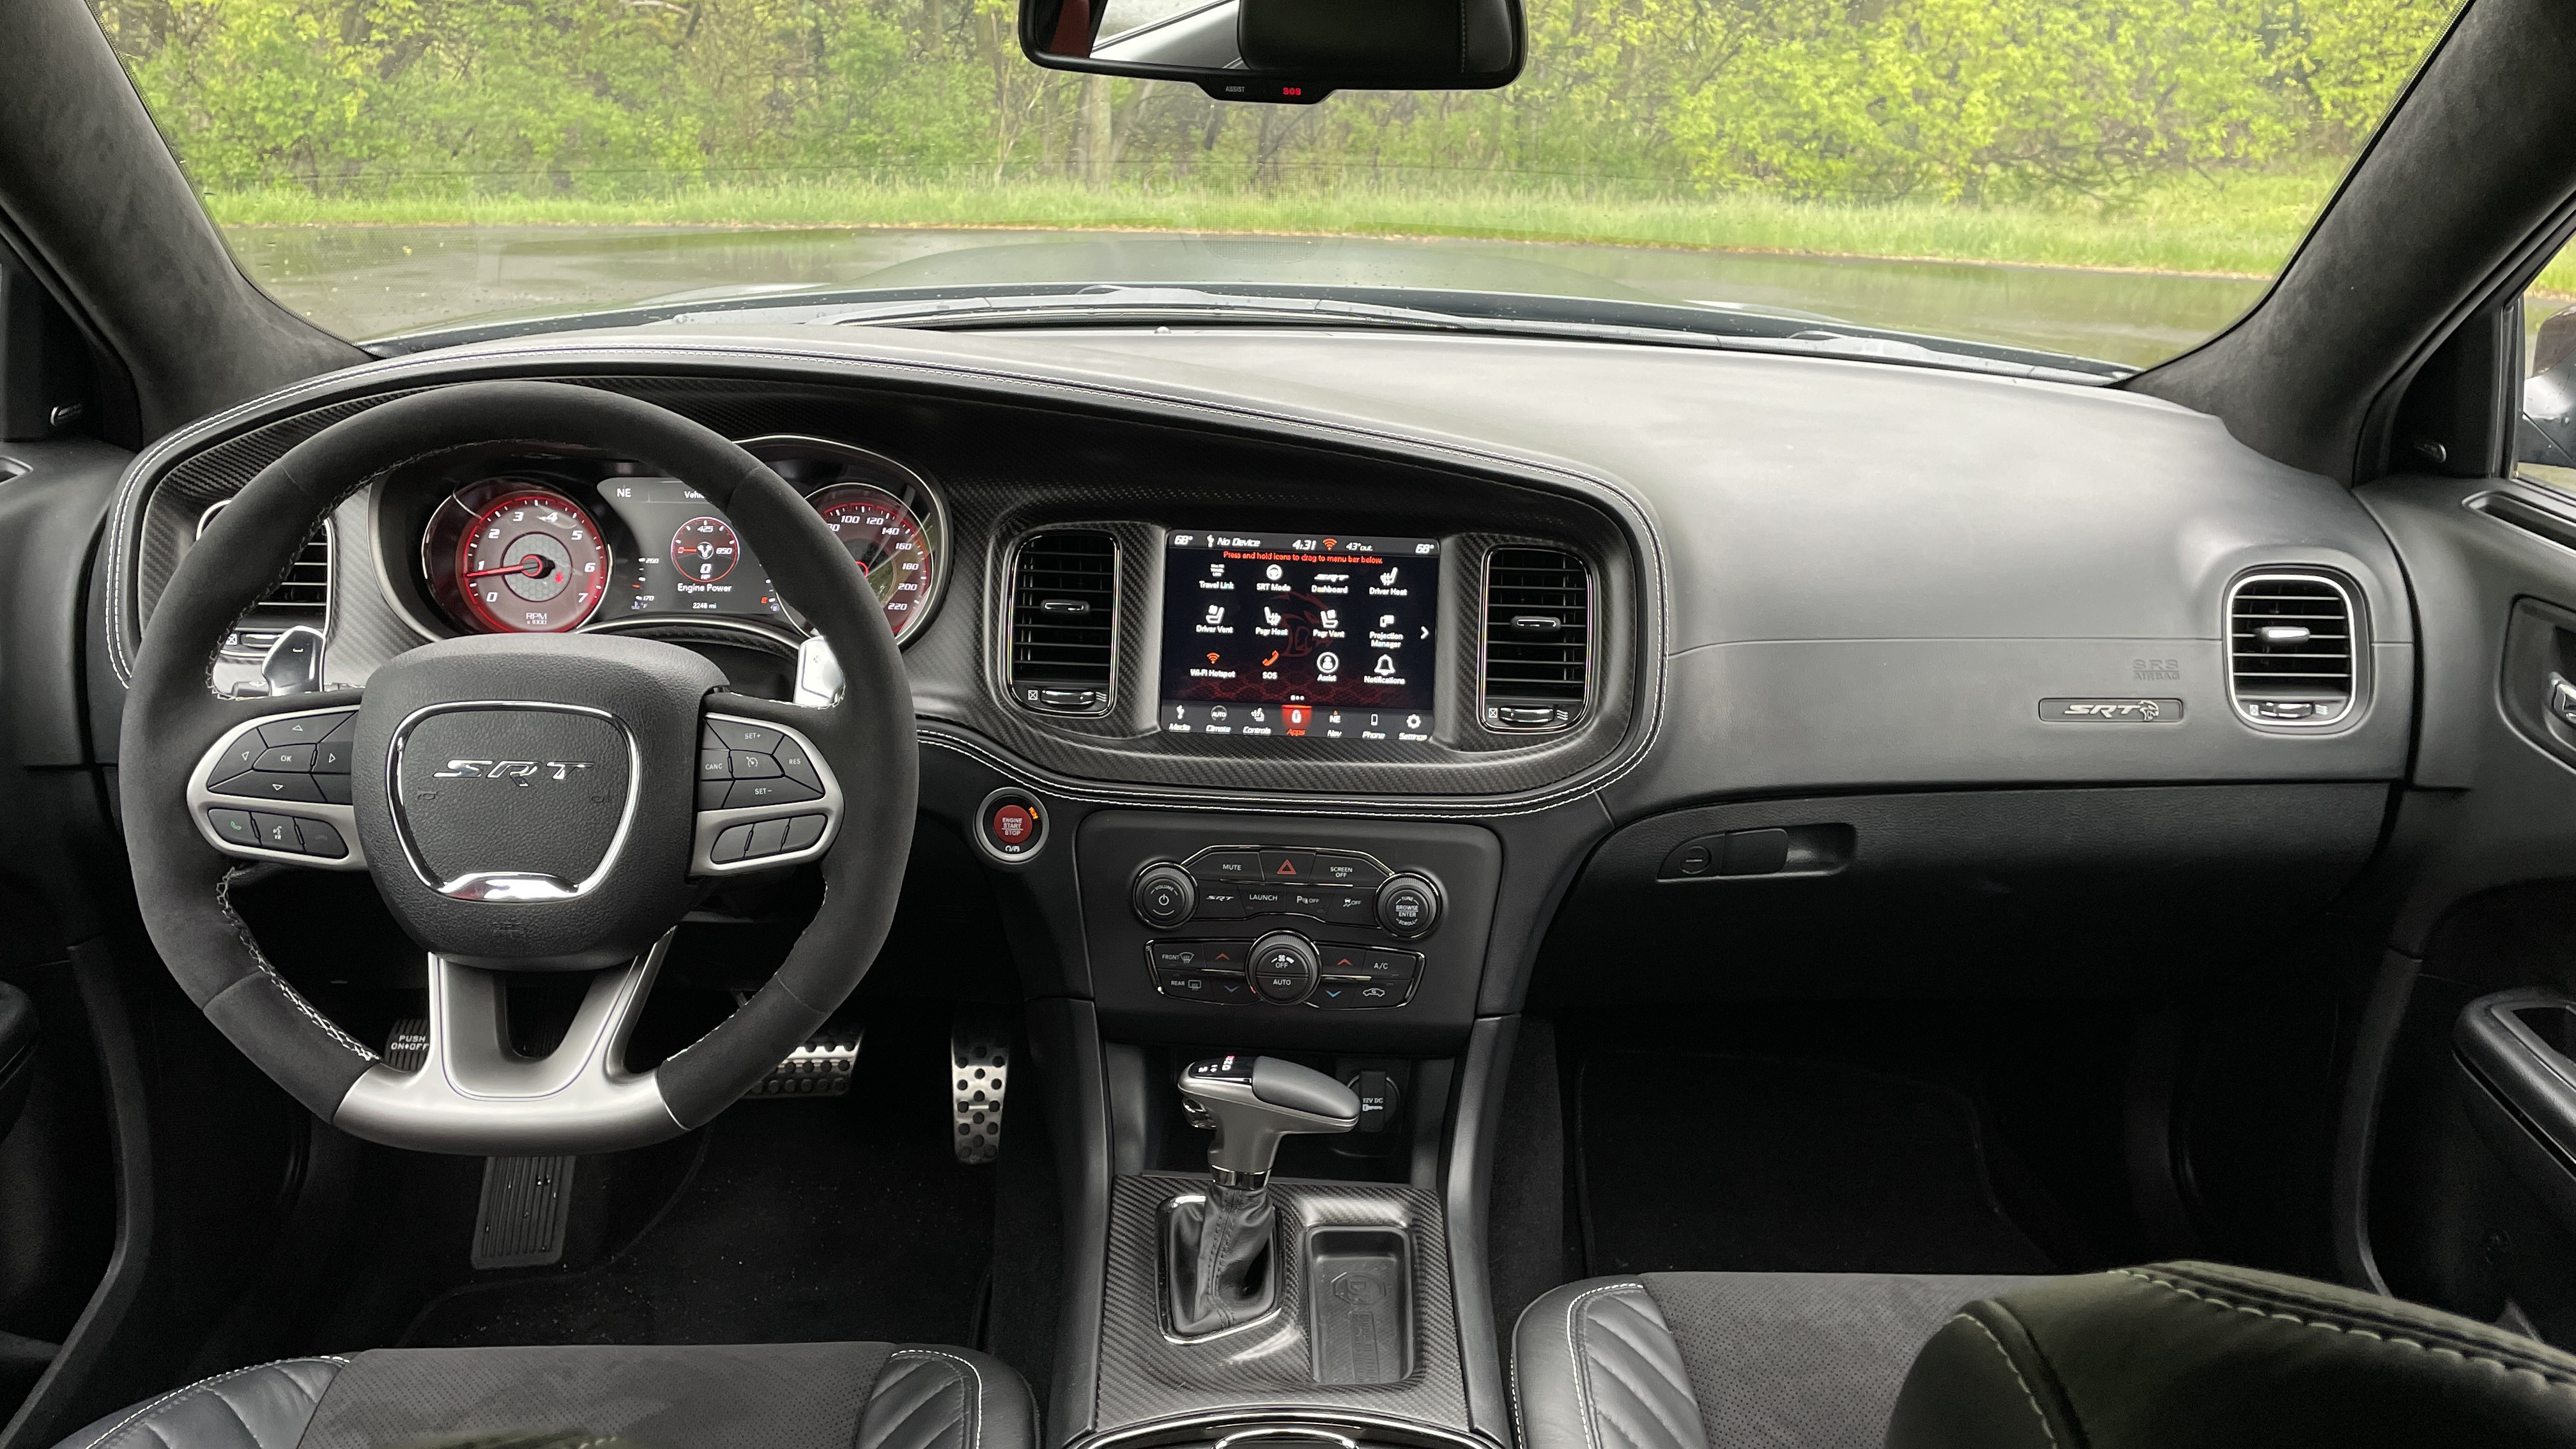 2021 Dodge Charger SRT Hellcat Redeye interior Photo Gallery